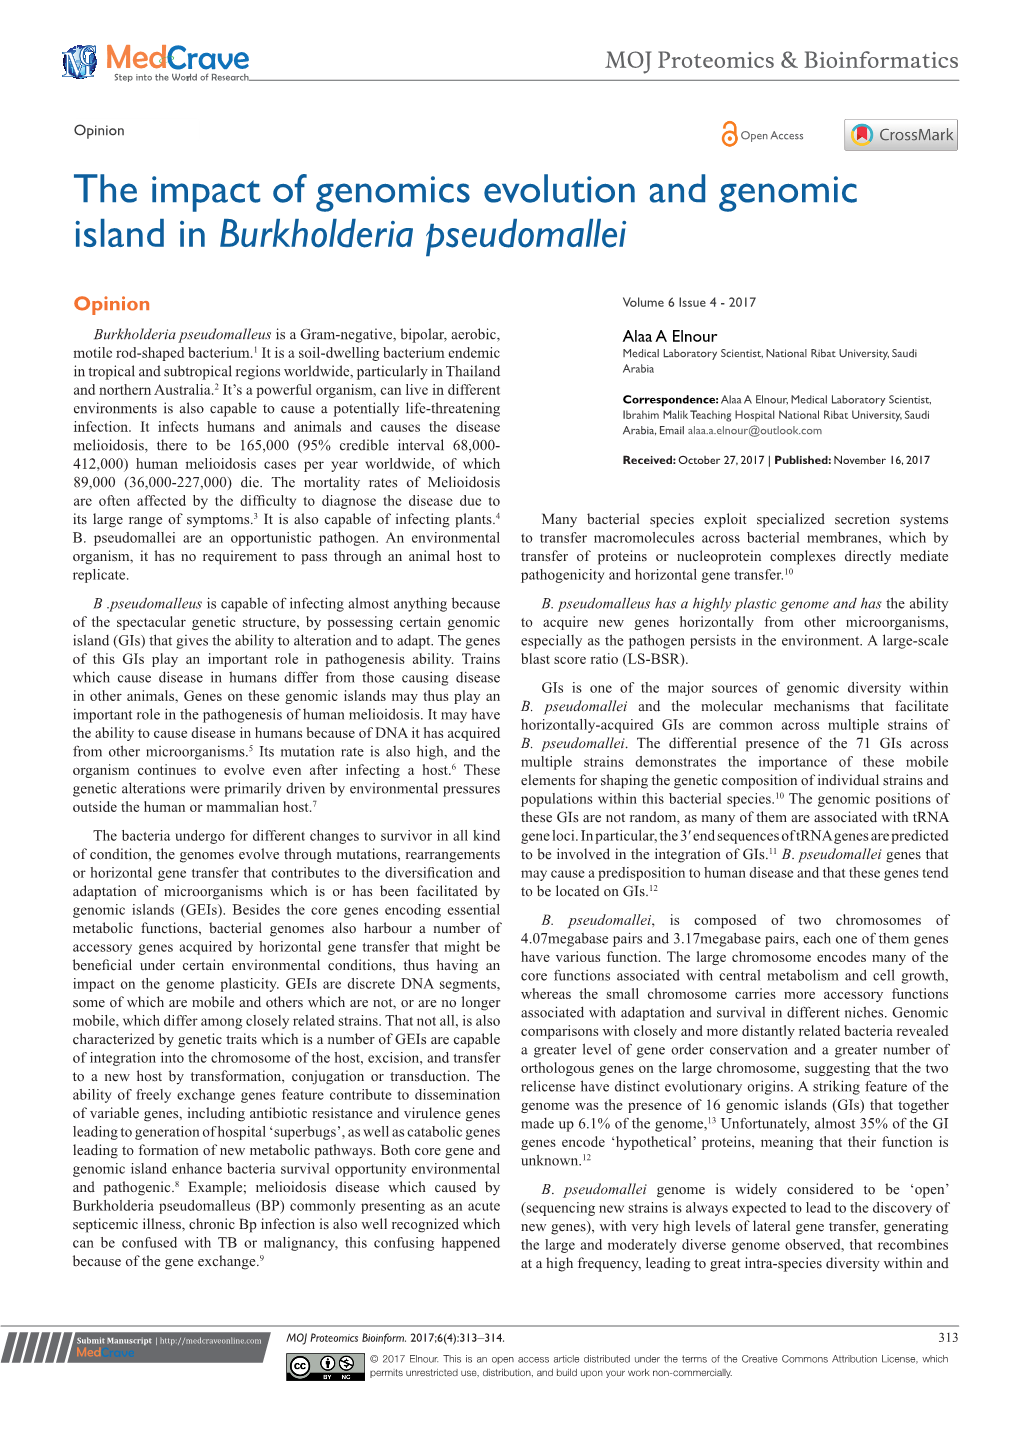 The Impact of Genomics Evolution and Genomic Island in Burkholderia Pseudomallei